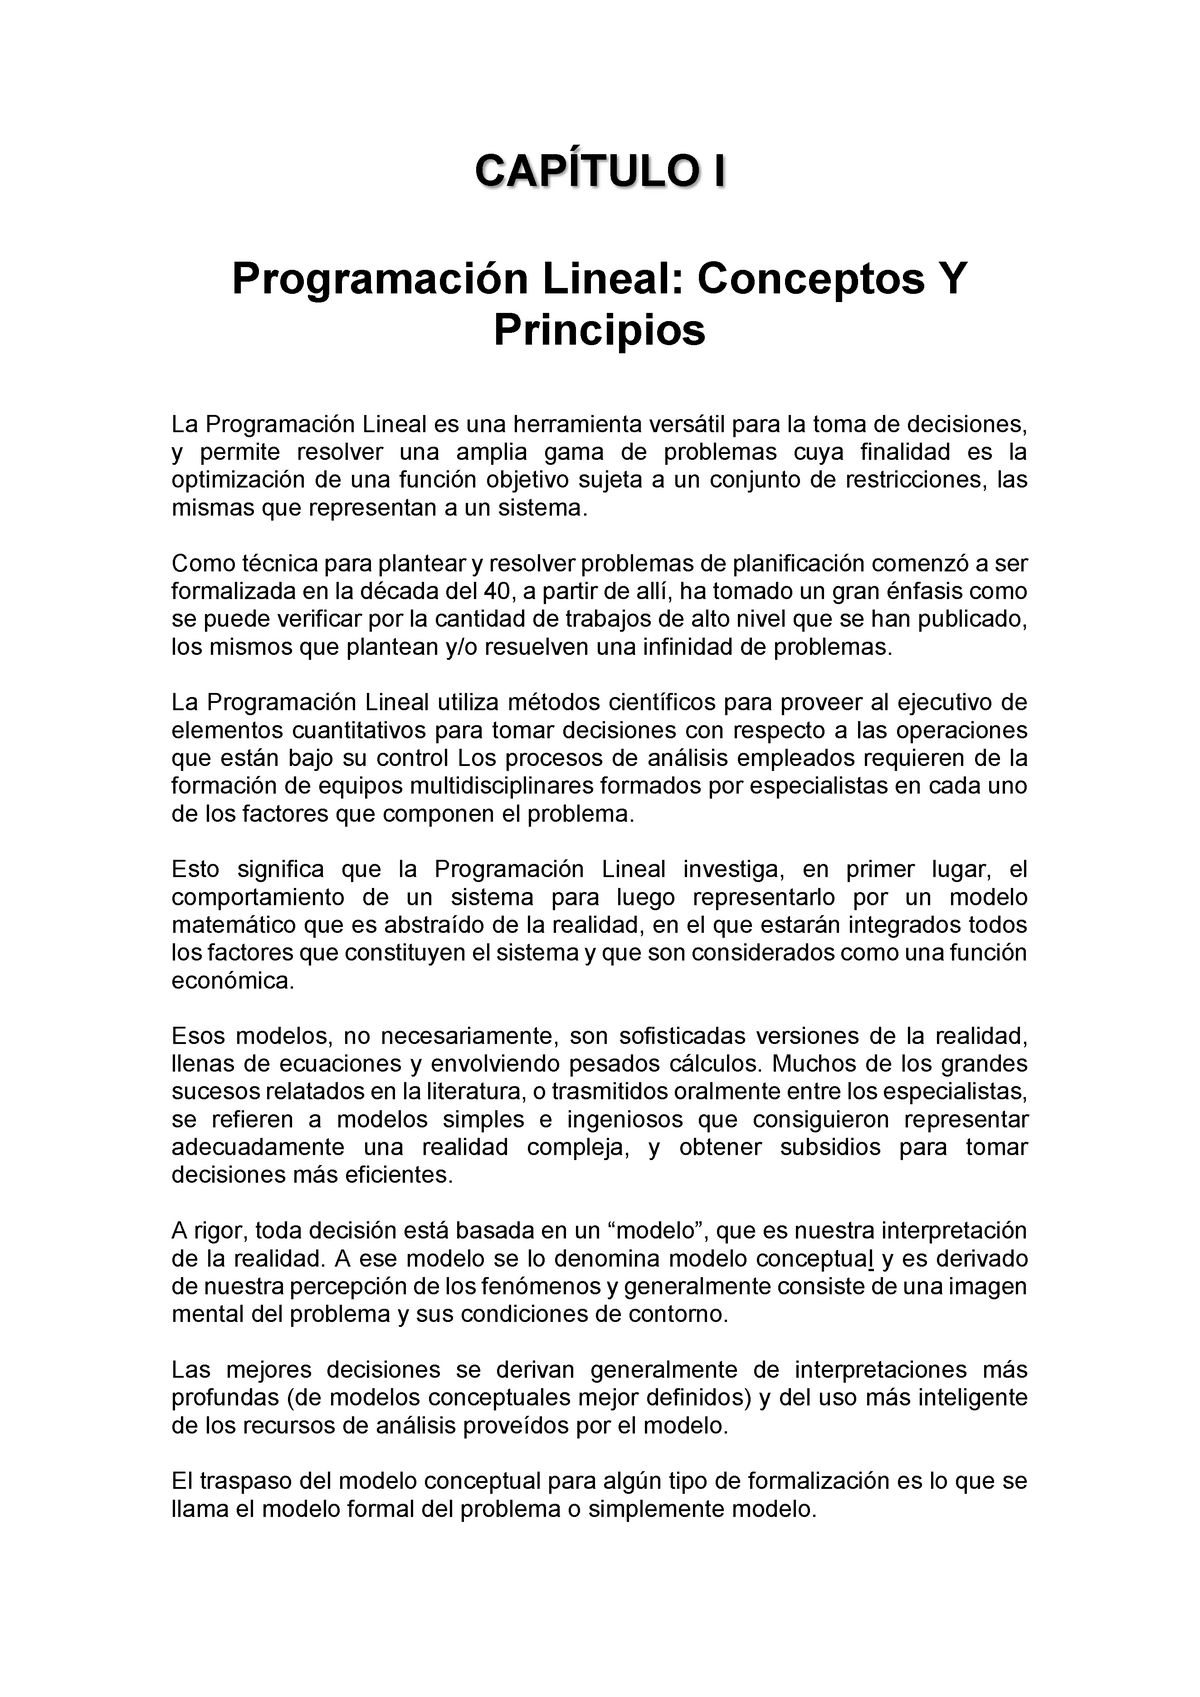 Capítulo I Programación Lineal - CAPÍTULO I Programación Lineal: Conceptos  Y Principios La - Studocu